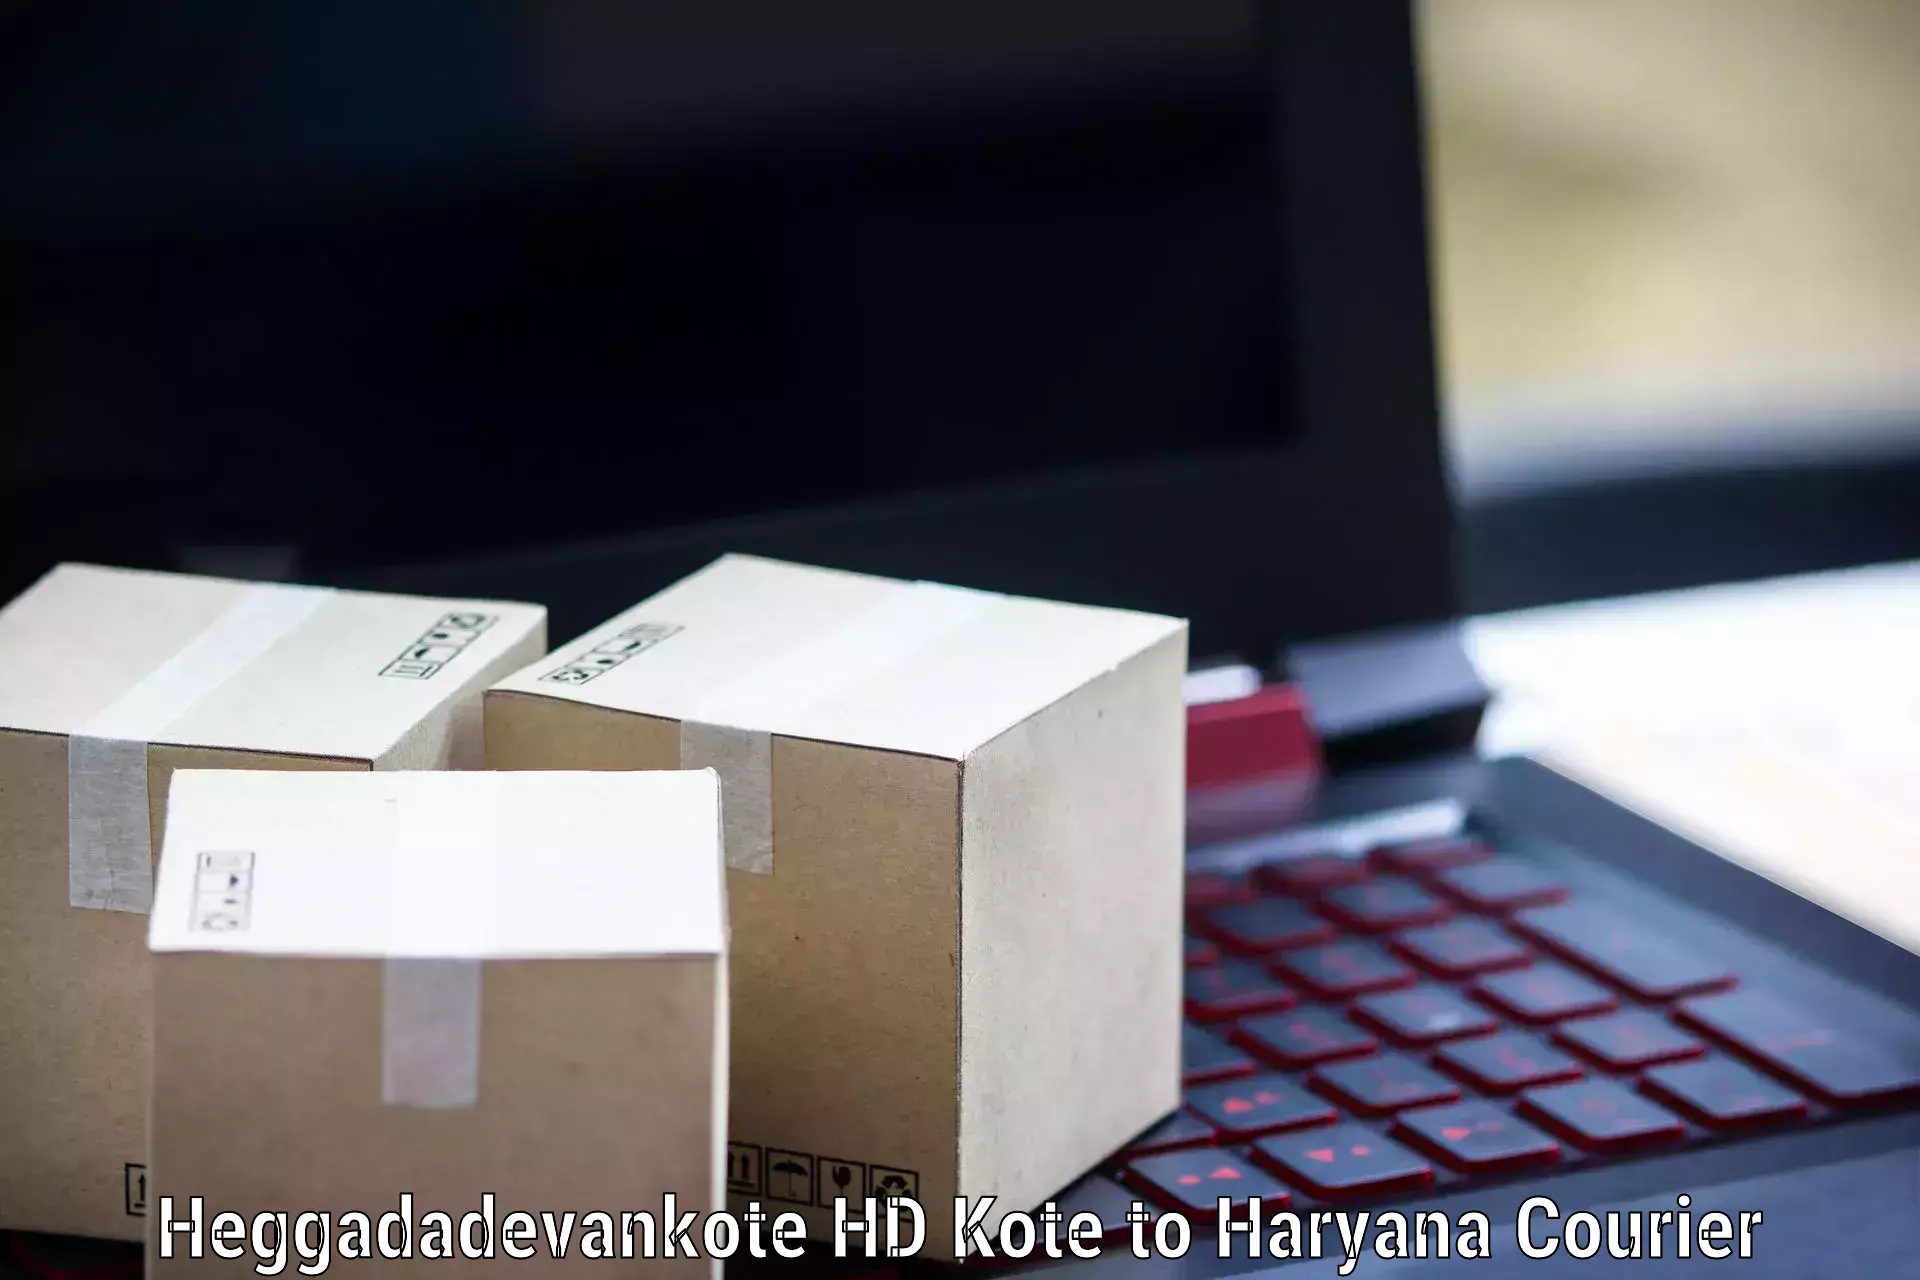 Modern delivery technologies Heggadadevankote HD Kote to Gurgaon